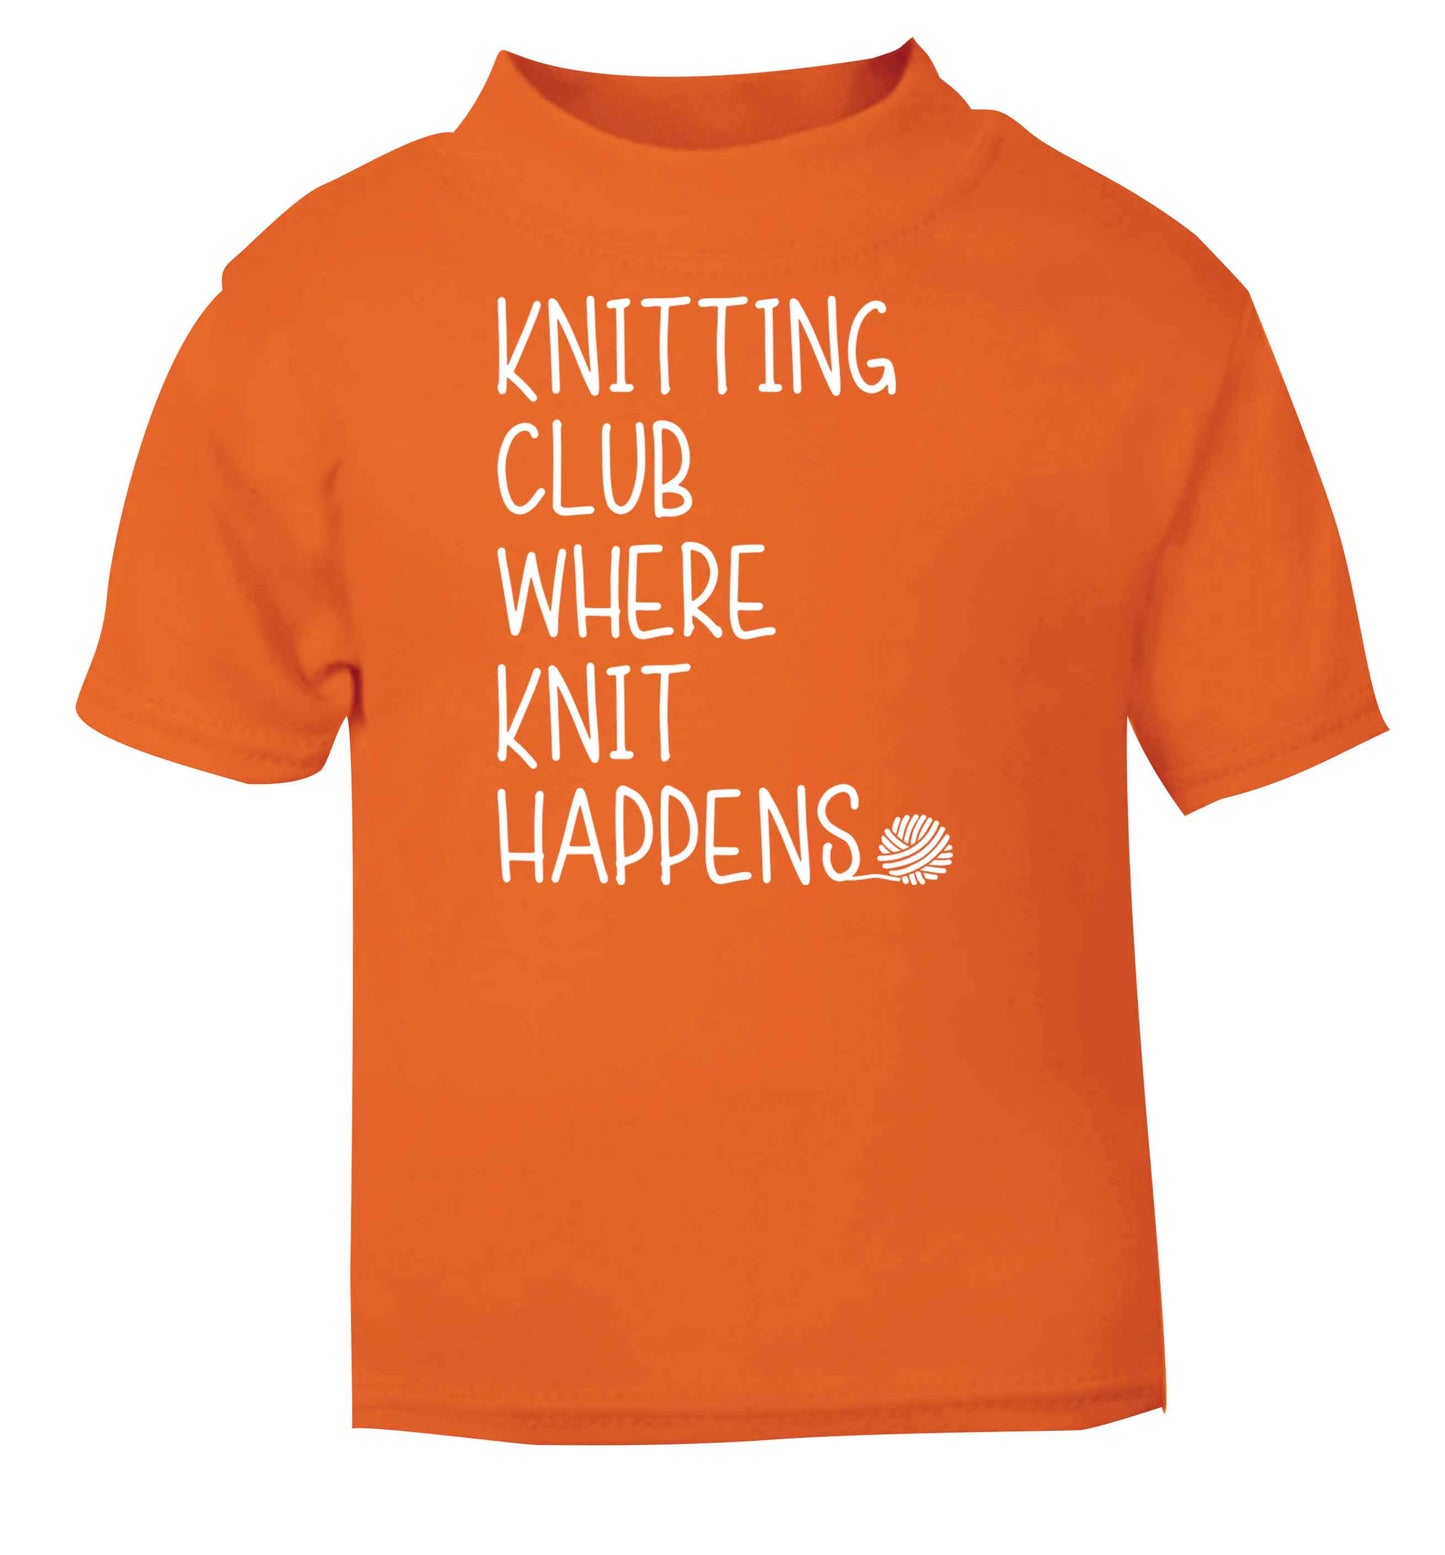 Knitting club where knit happens orange baby toddler Tshirt 2 Years